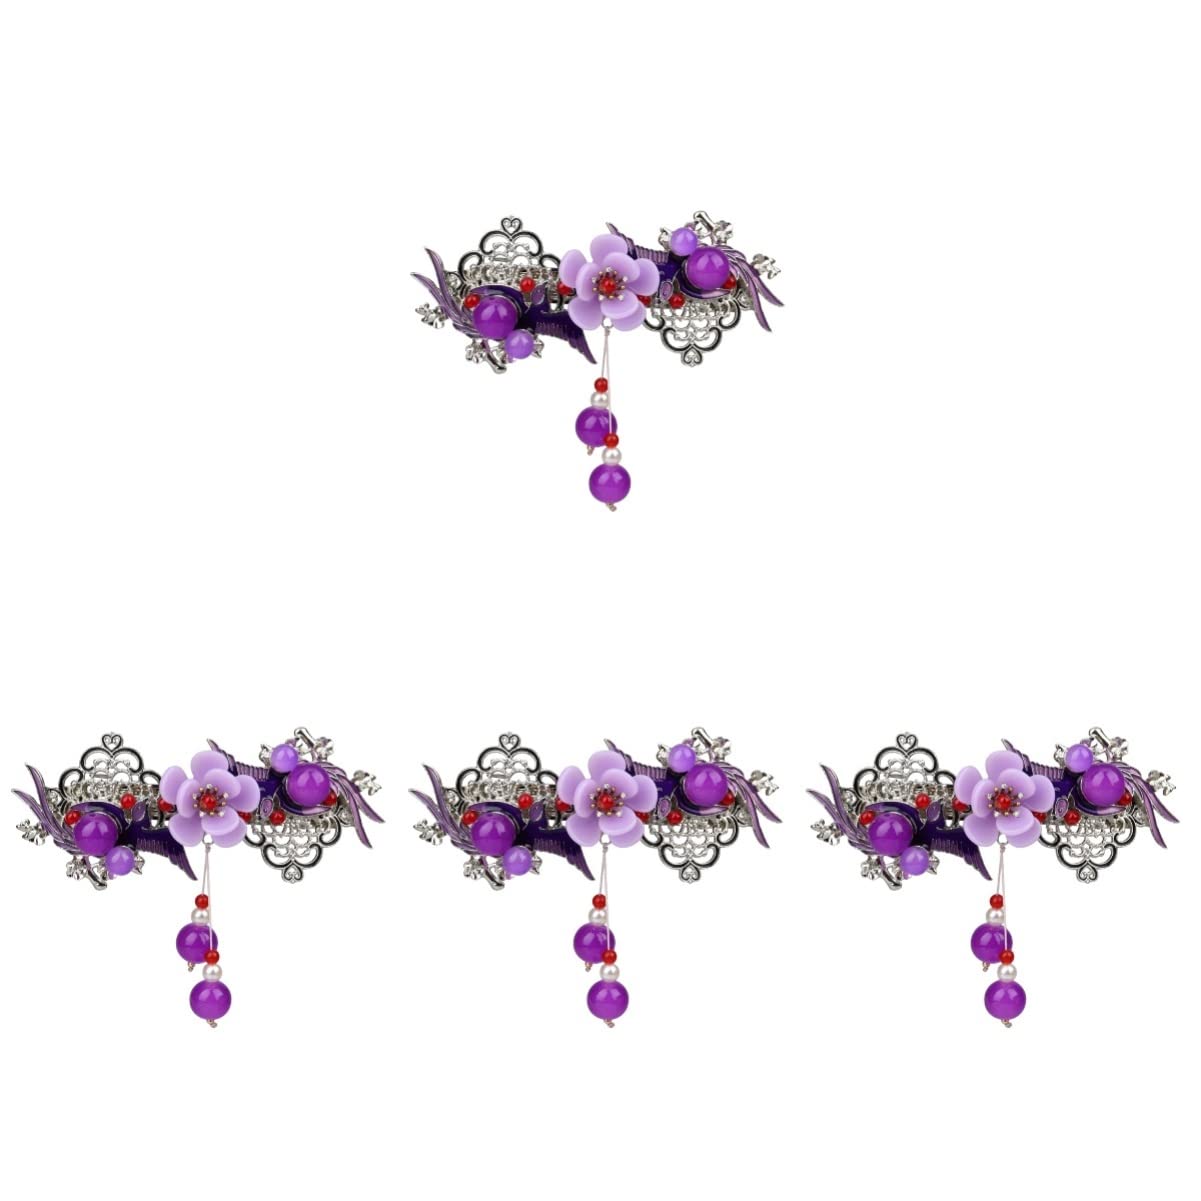 SHUBIAO 6 Stück Vintage Dekorative Blume Blume Haarspangen for Frauen Dekorative Haarspangen Haarschmuck for Frauen Haarspange Quaste Haarspangen (Color : Purplex3pcs, Size : 8.6X3.8X2.5CMx4pcs)